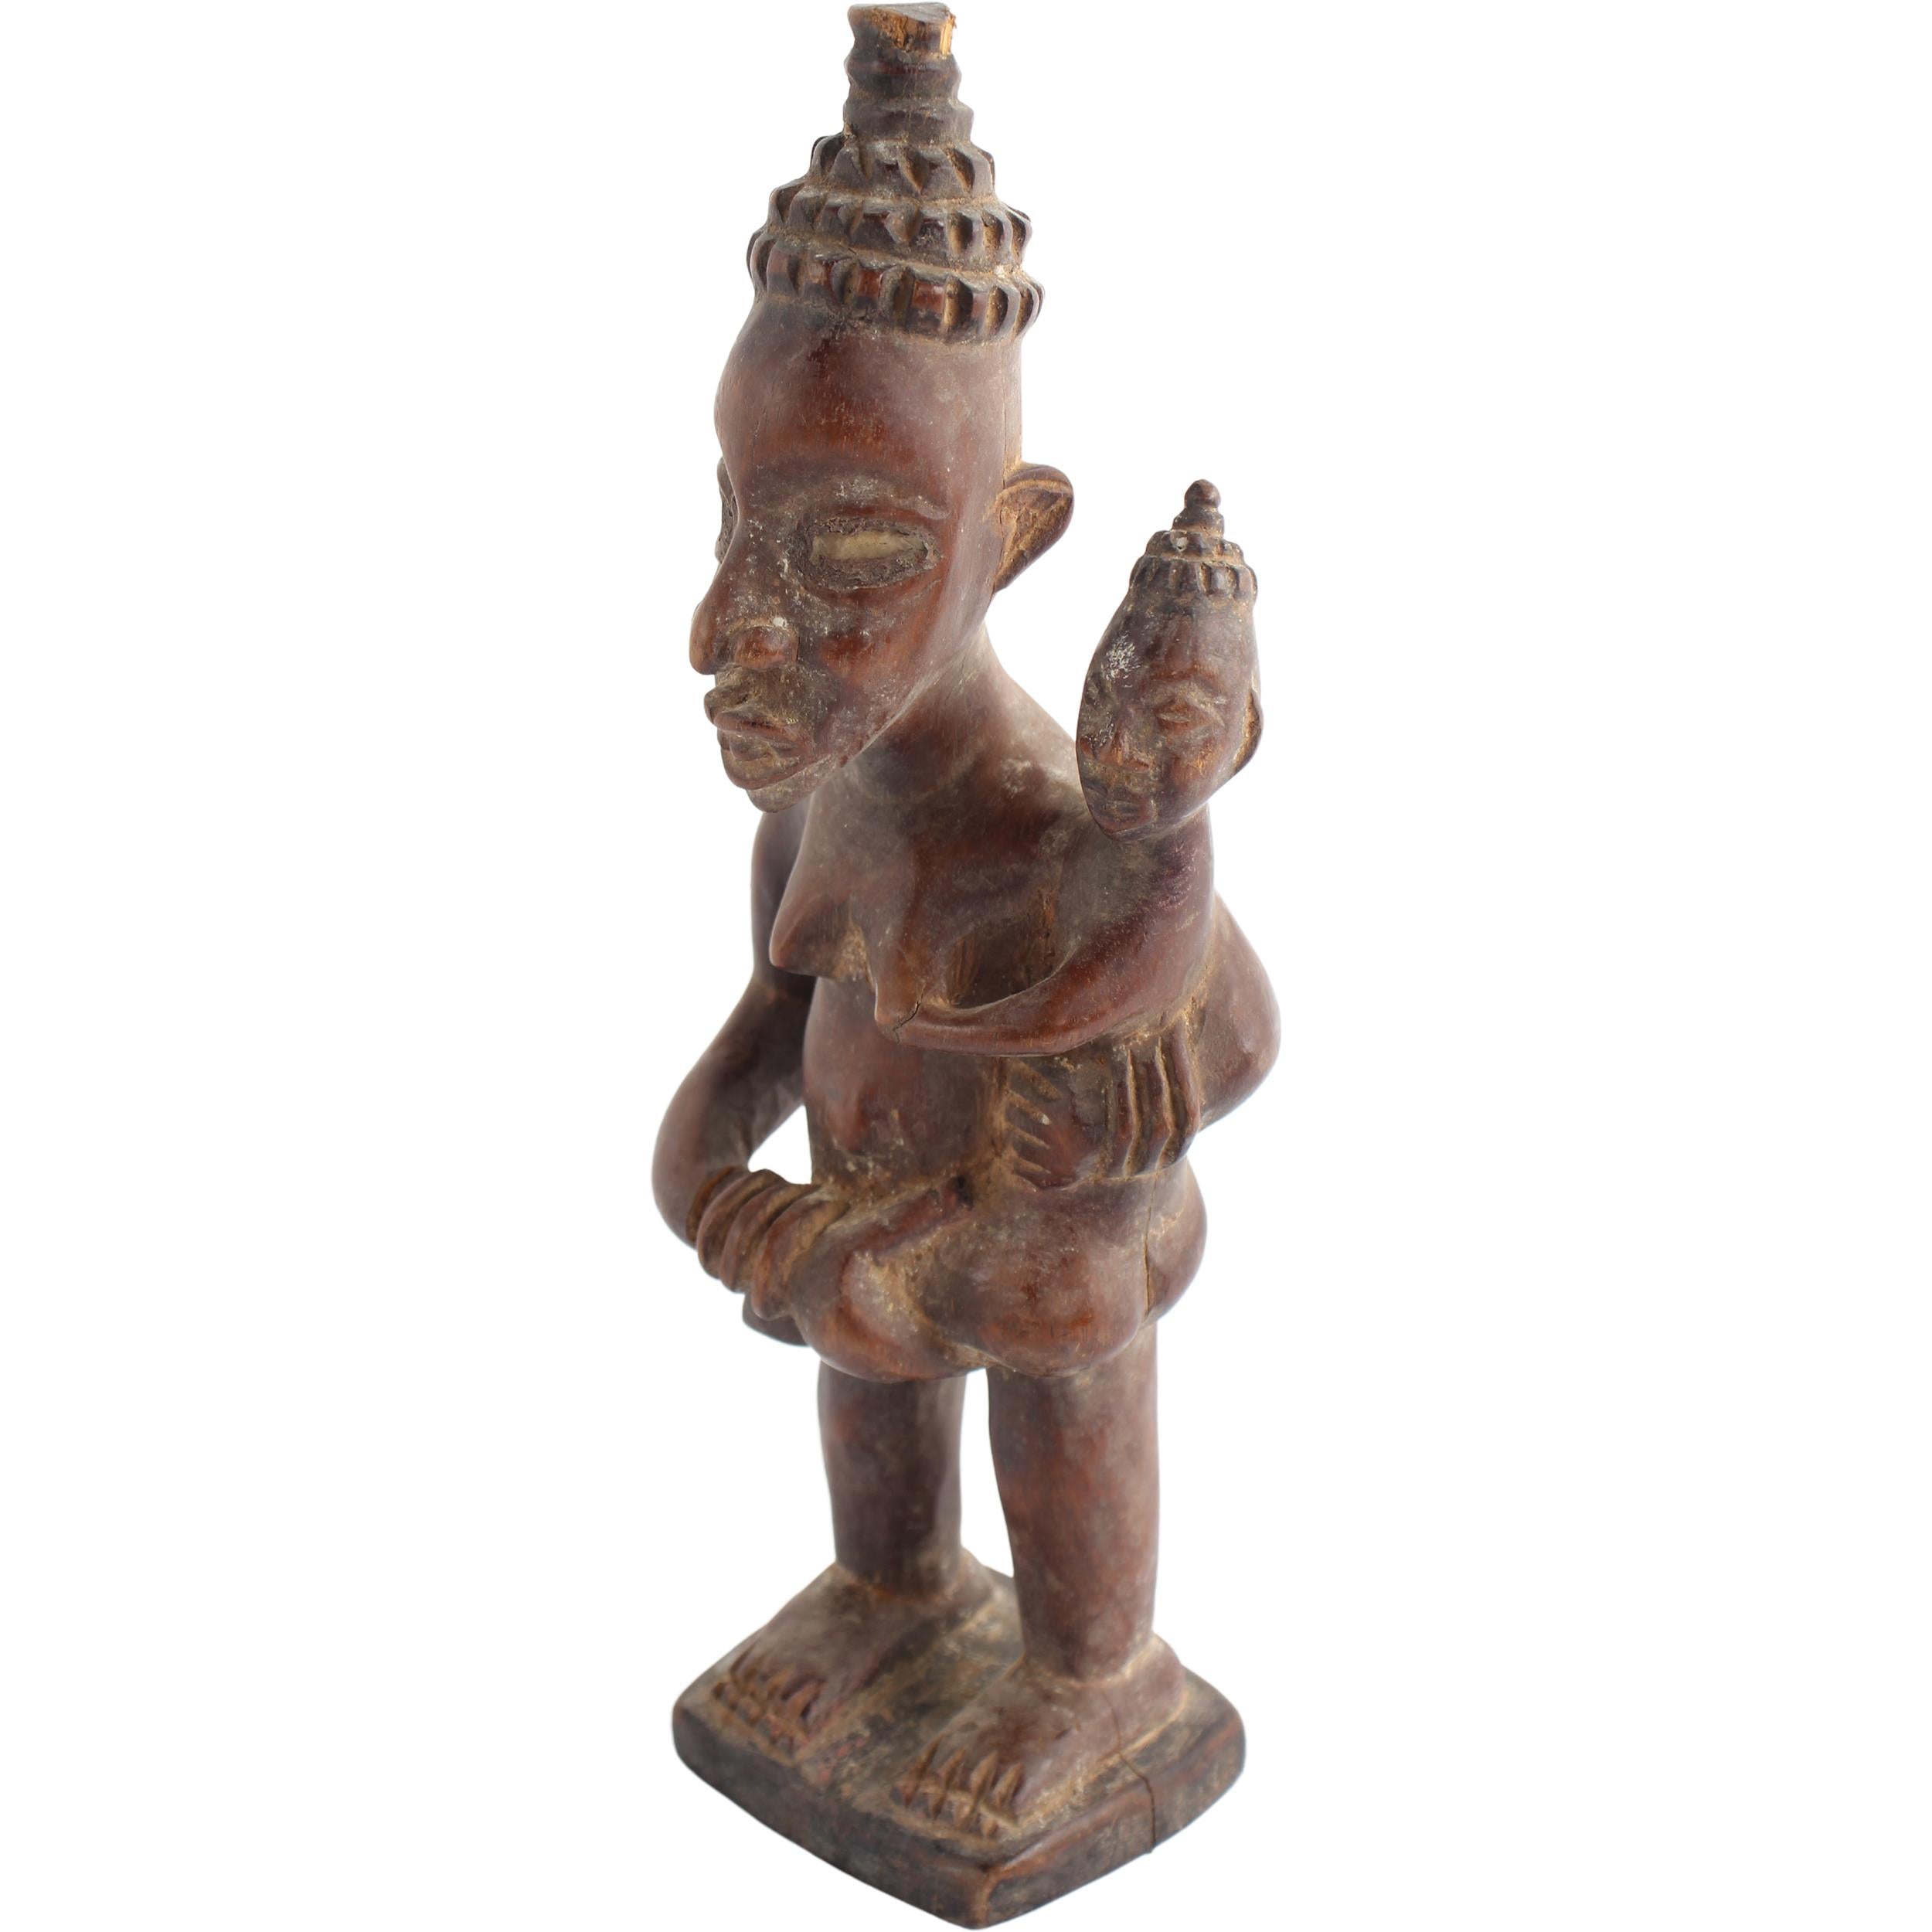 Yoruba Tribe Figurine ~11.0" Tall - Figurine